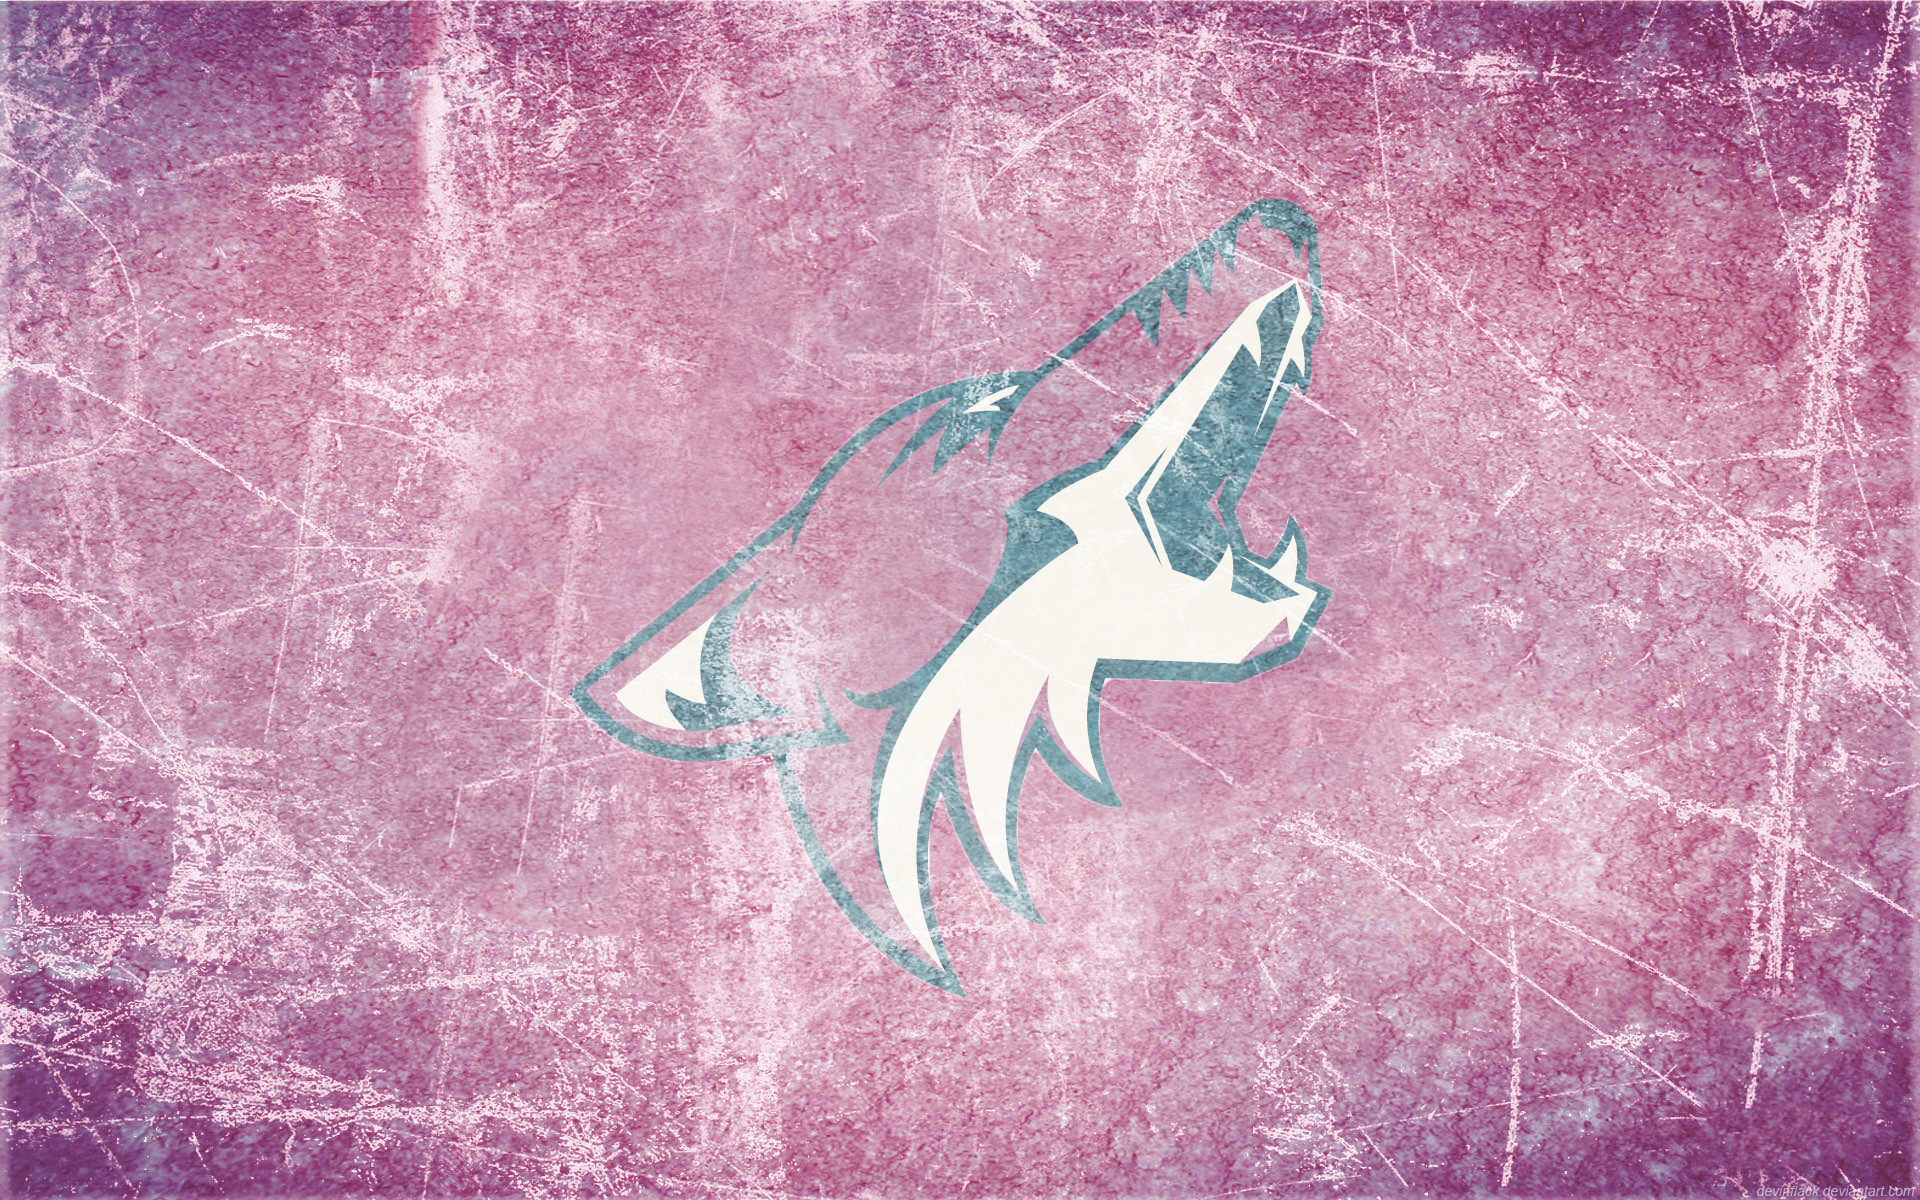 فینیکس کایوتیس (Arizona Coyotes)